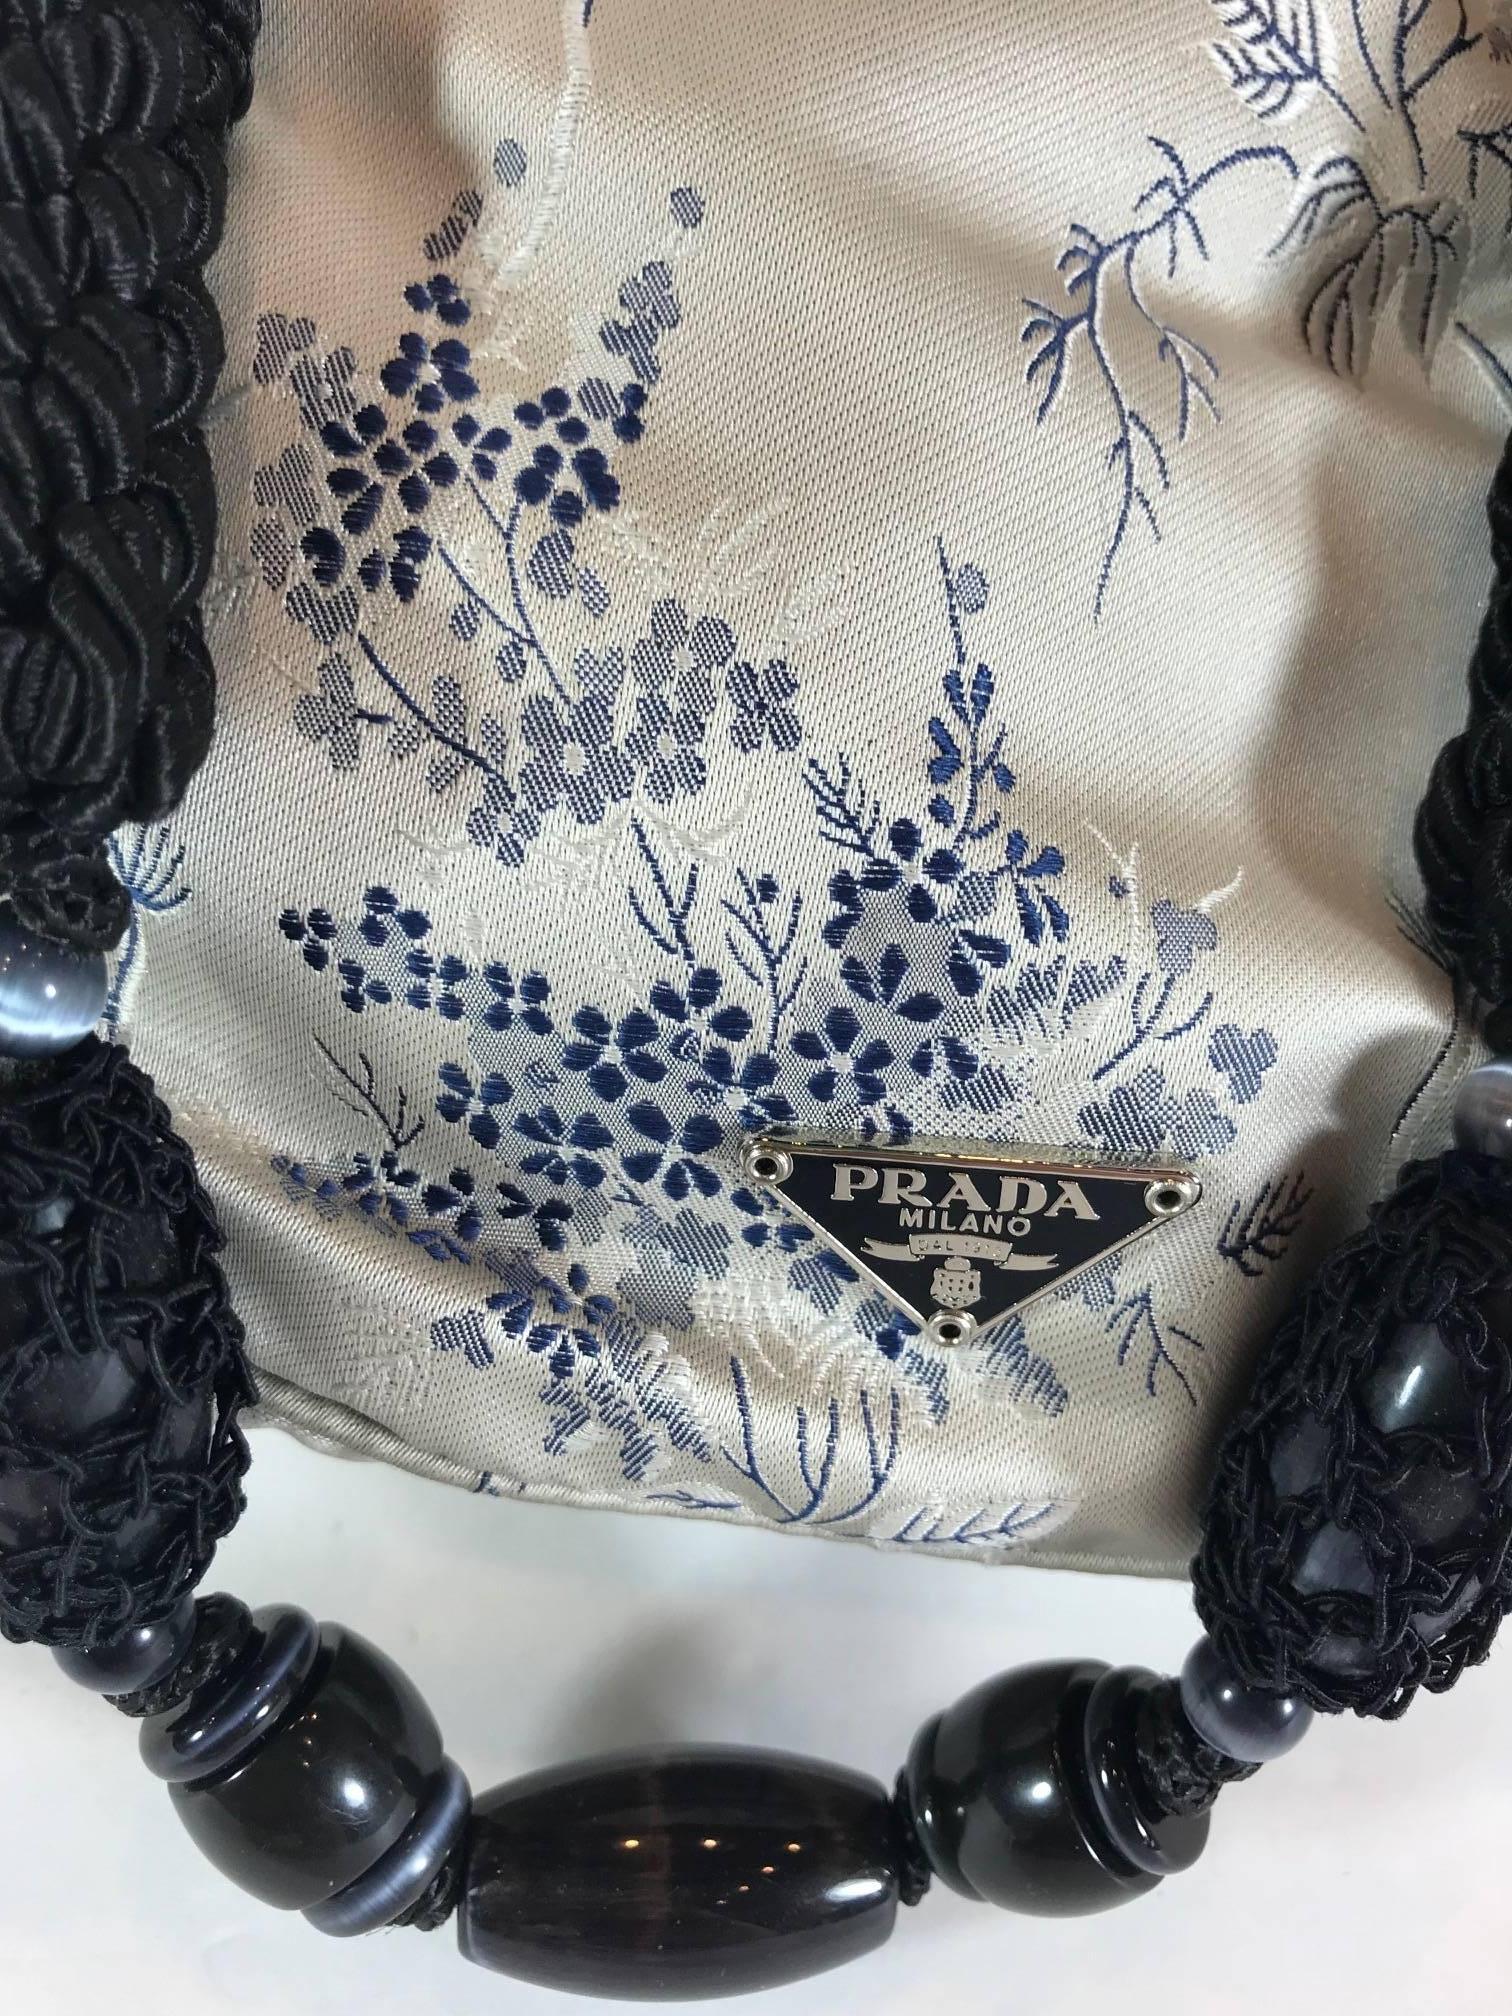 Women's or Men's Prada Floral Satin Evening Bag